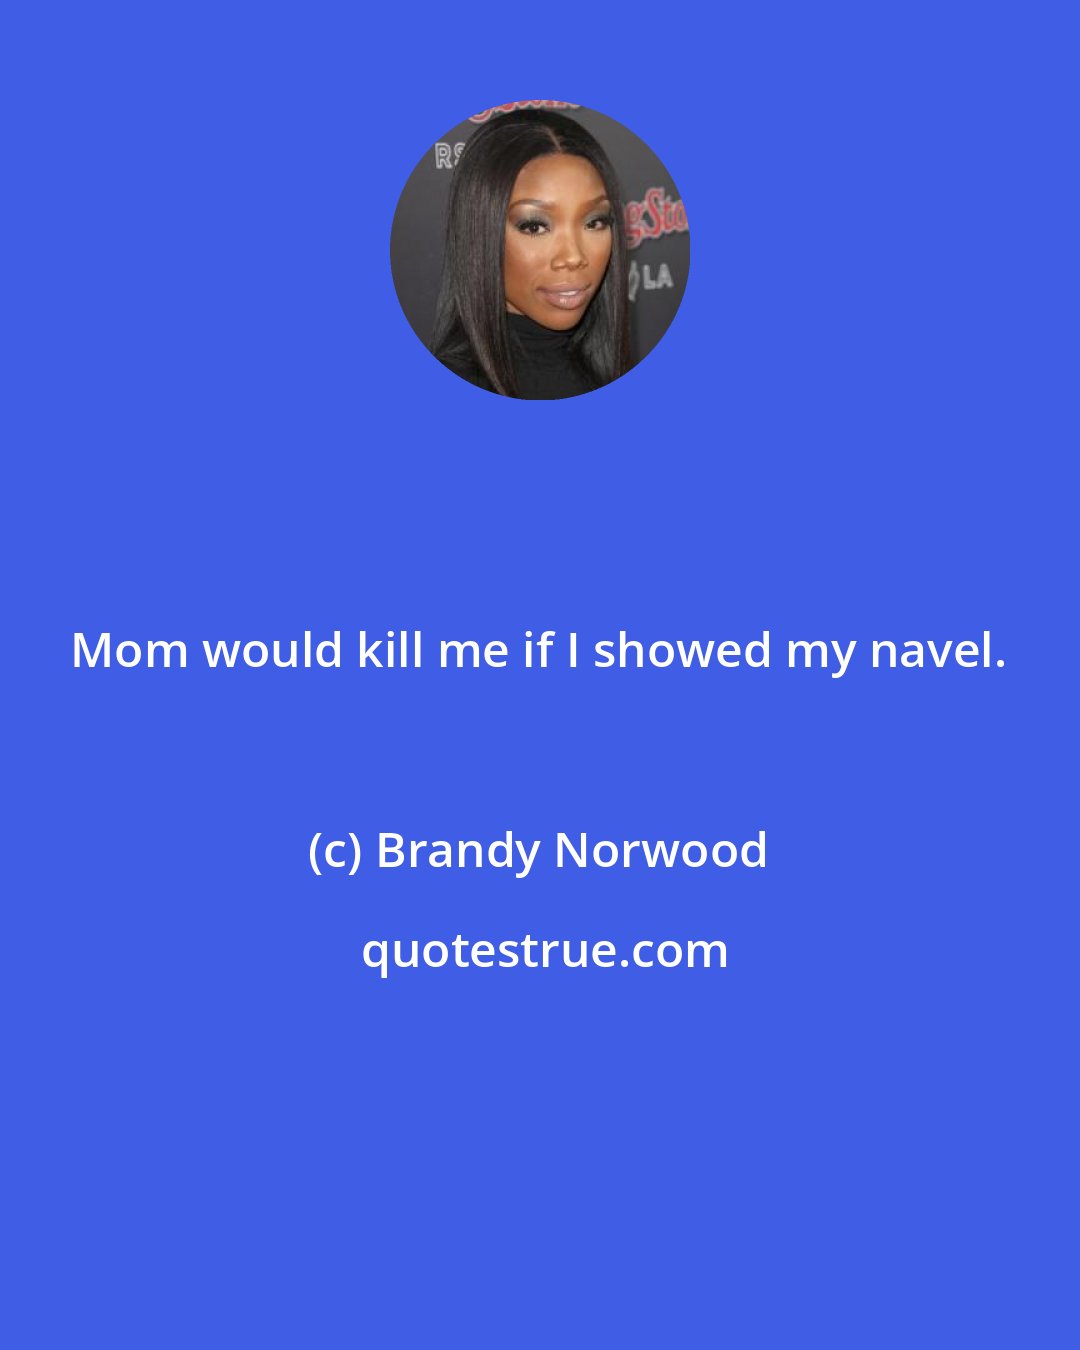 Brandy Norwood: Mom would kill me if I showed my navel.